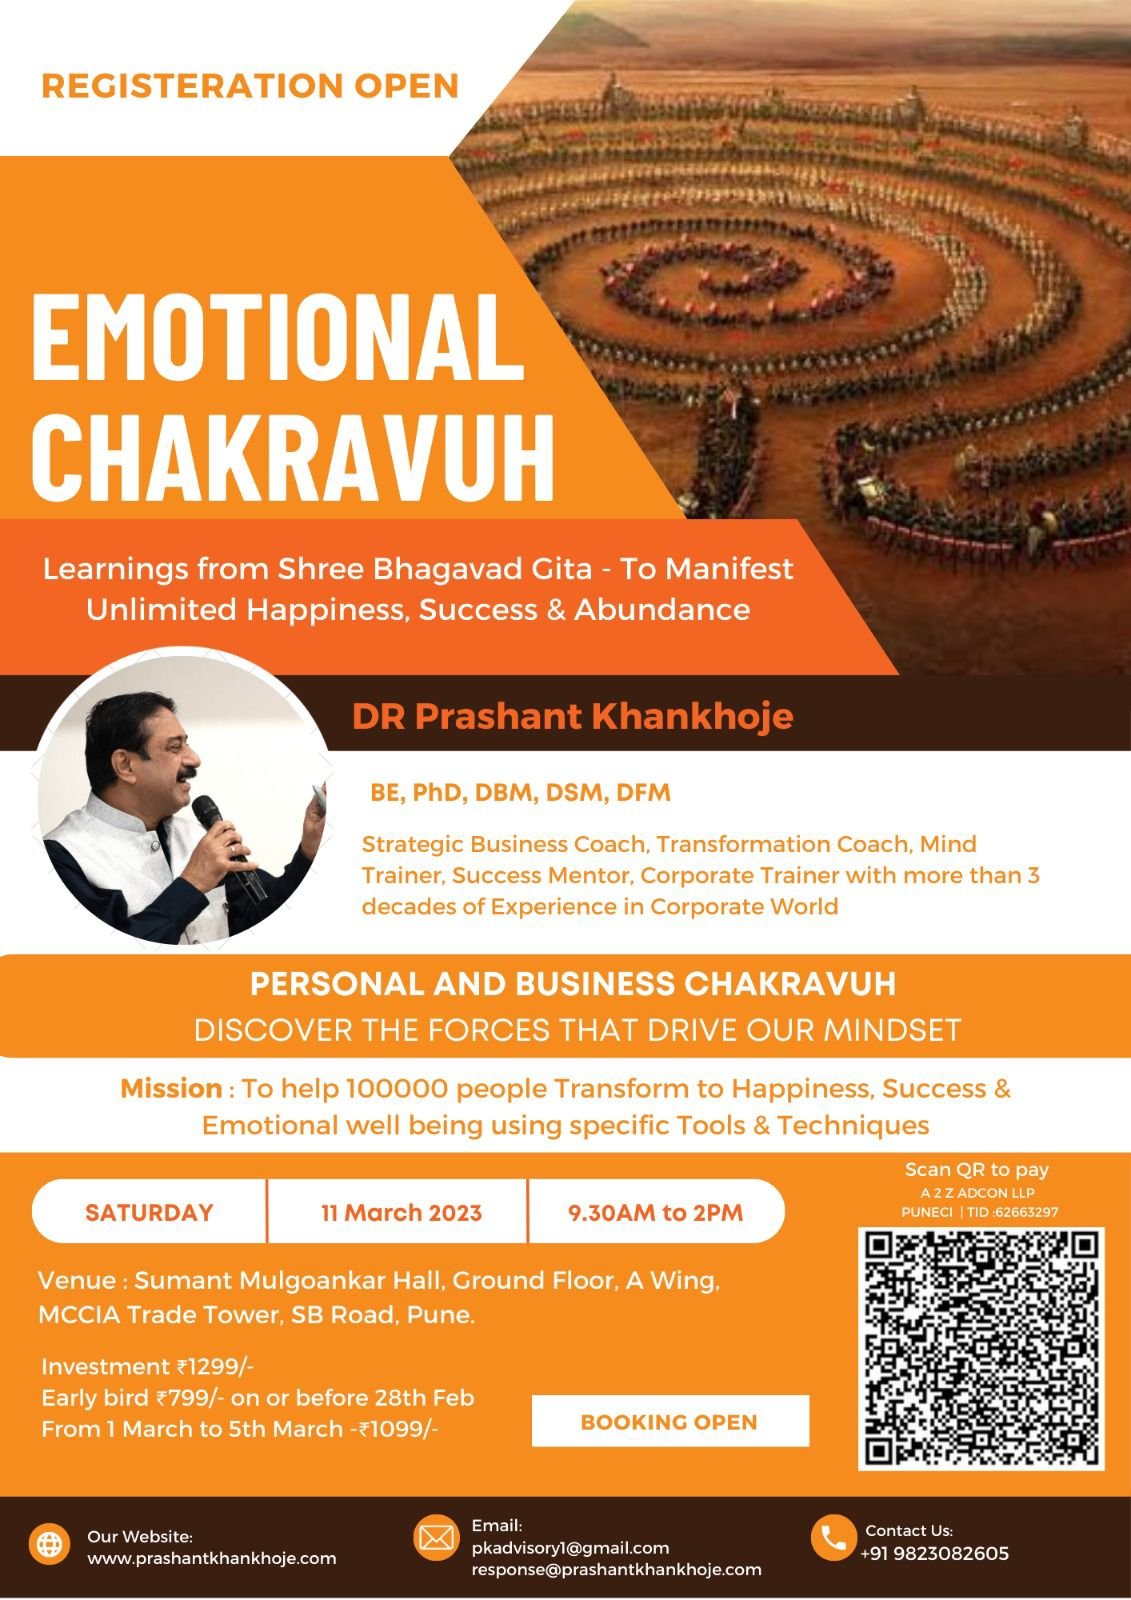 EMOTIONAL CHAKRAVUH - LEARNINGS FROM SHREE BHAGAVAD GITA